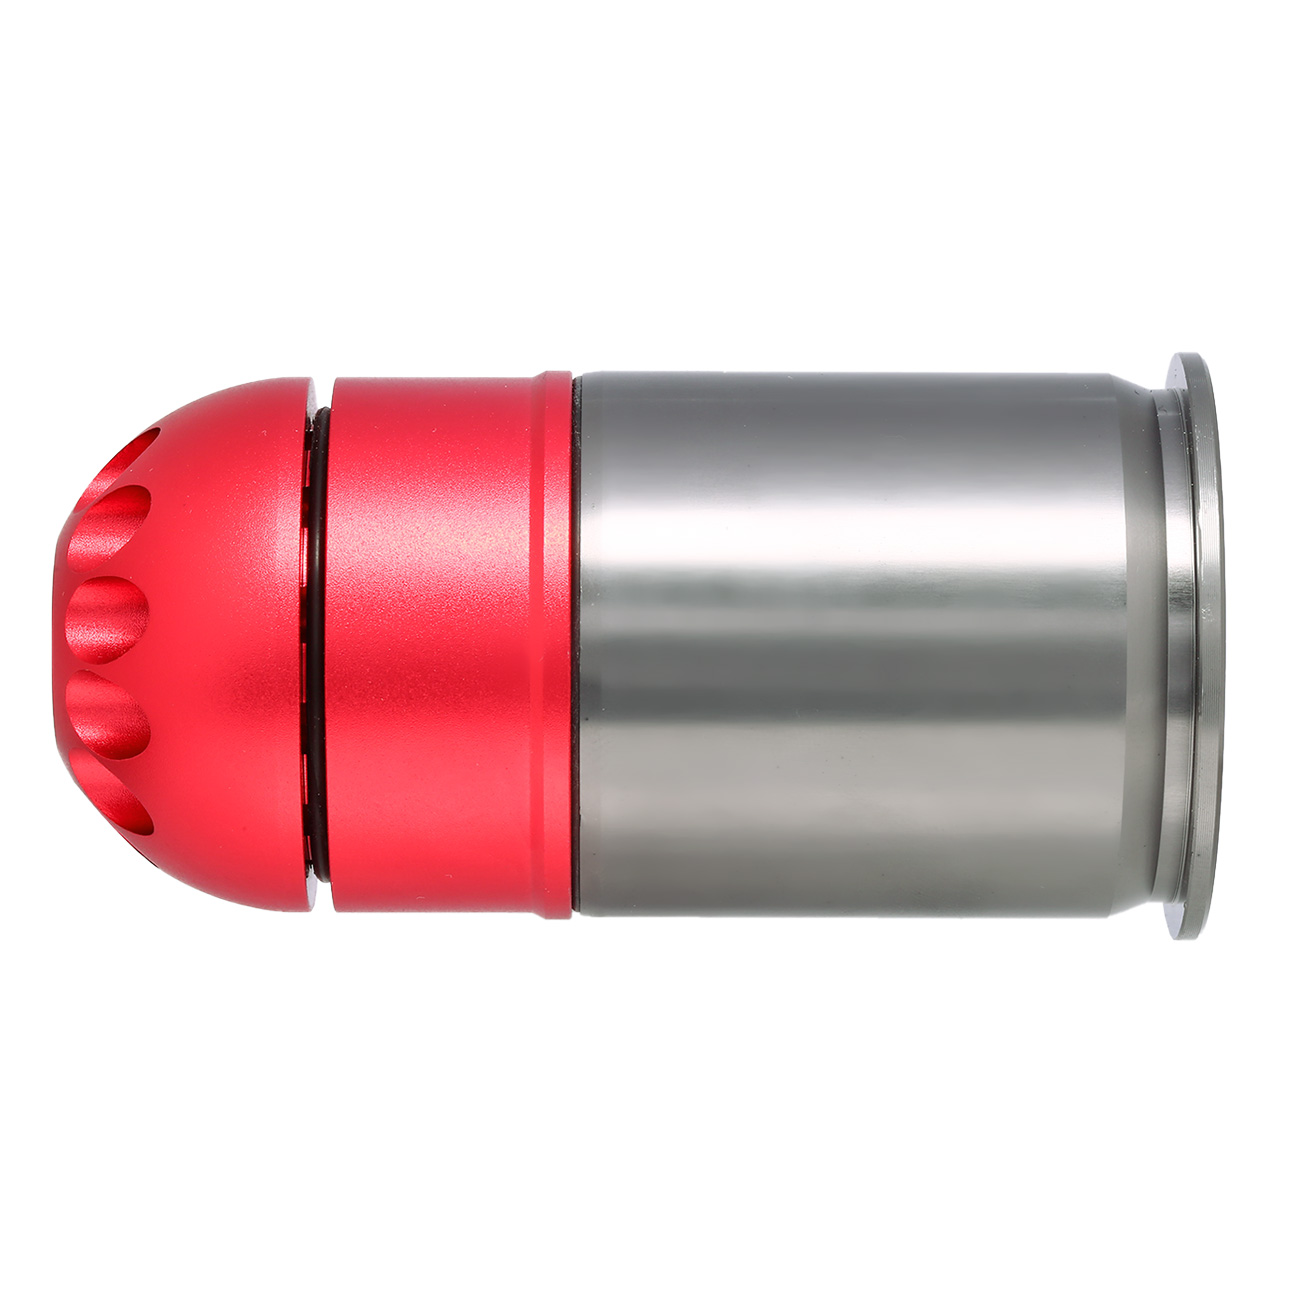 Nuprol 40mm Vollmetall Hlse / Einlegepatrone f. 72 6mm BBs rot - 3 Stck Bild 2